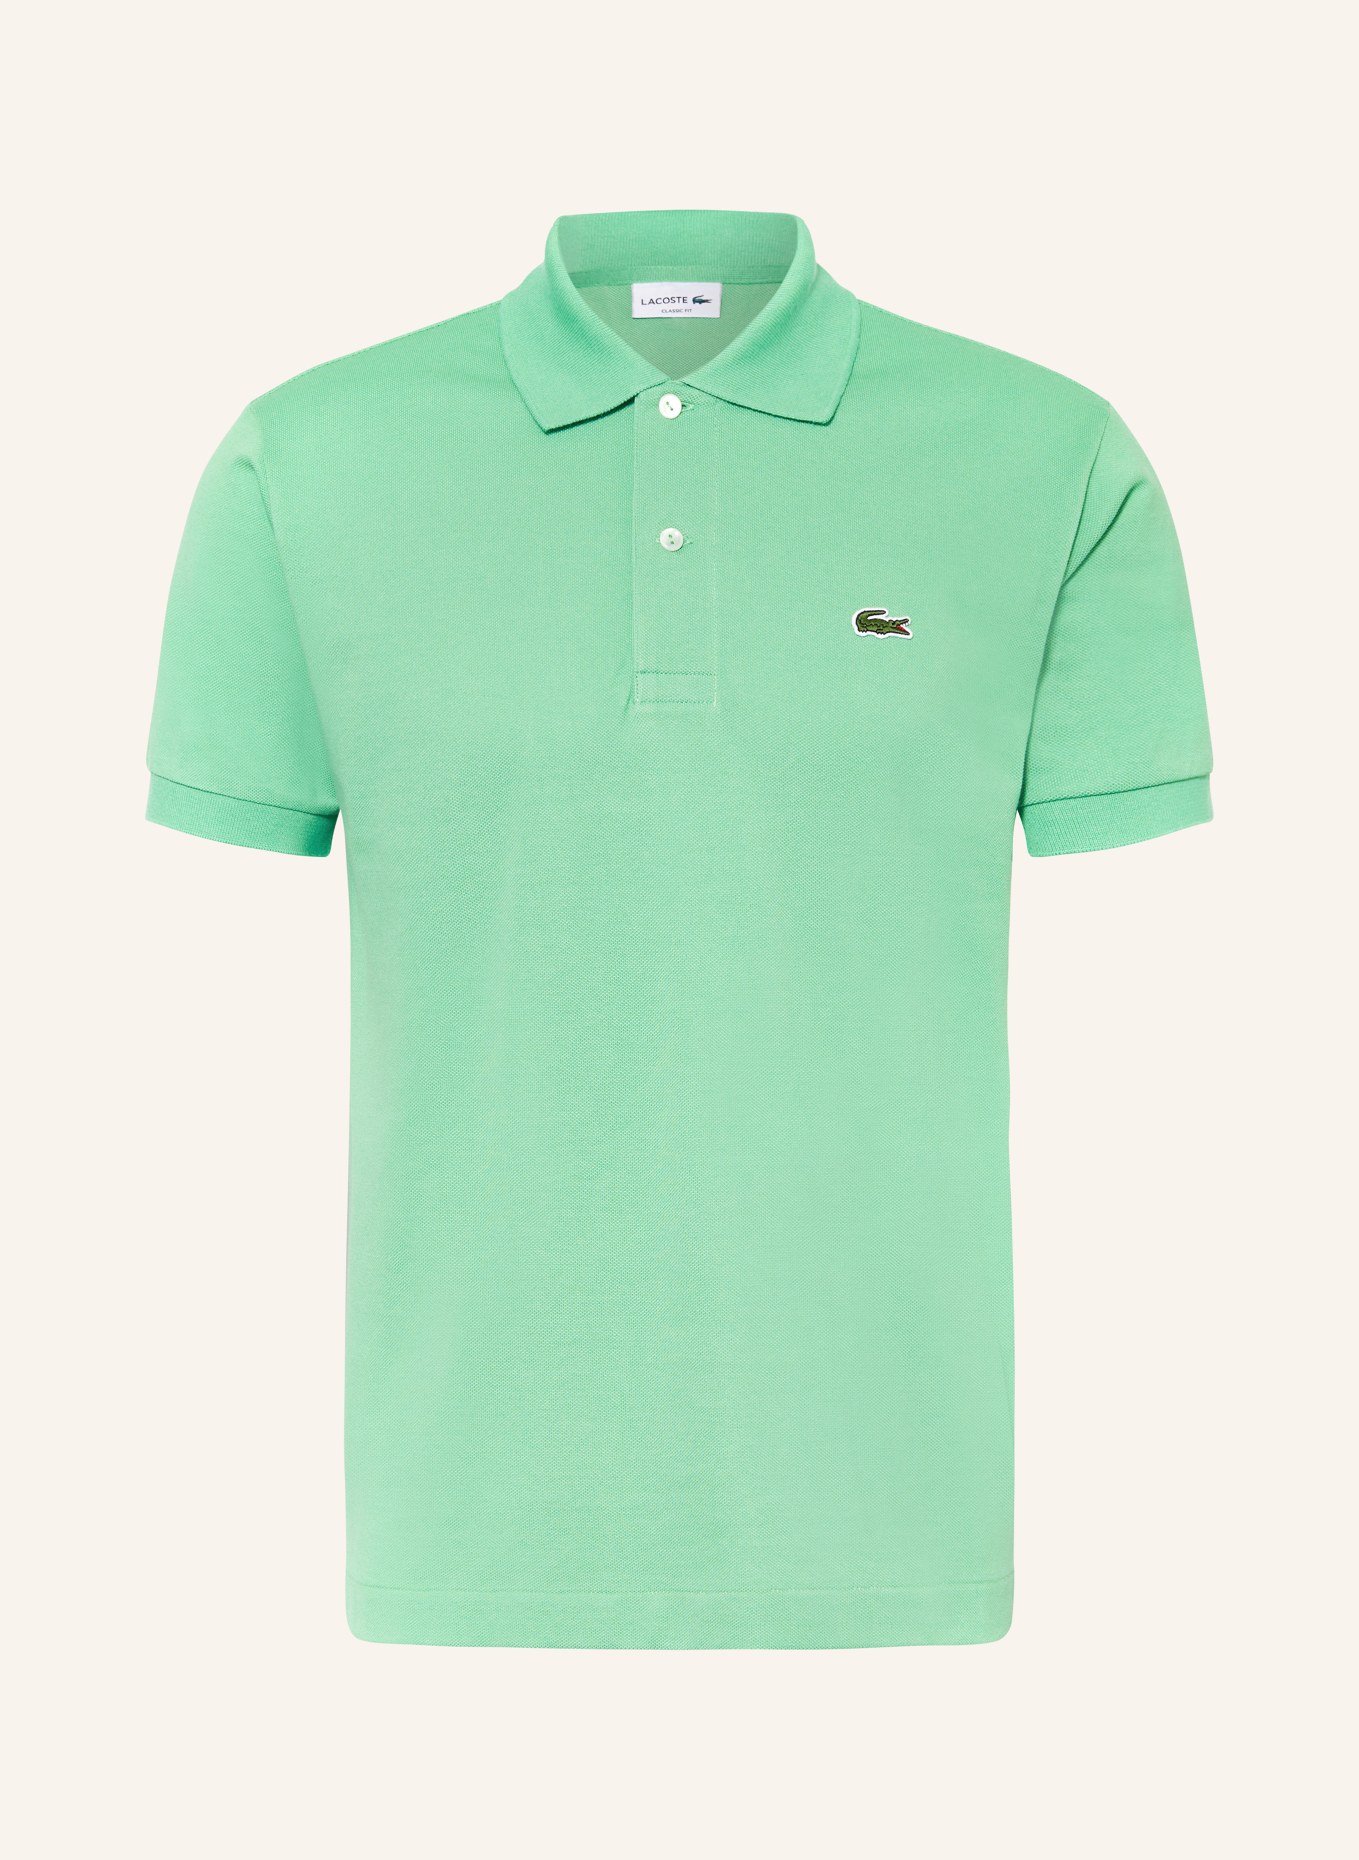 LACOSTE Piqué-Poloshirt Classic Fit, Farbe: MINT (Bild 1)